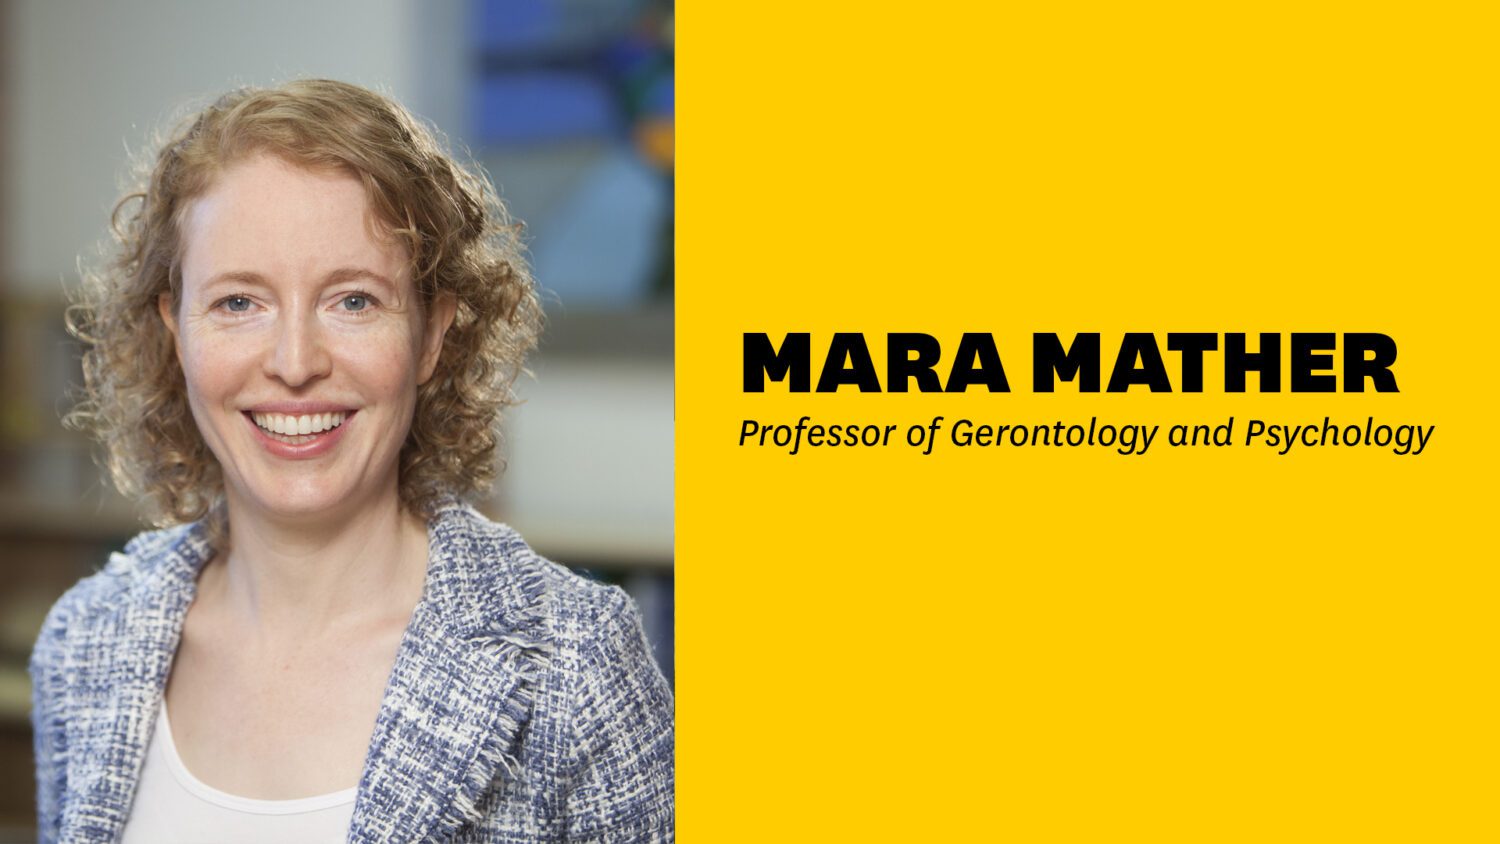 Professor Mara Mather: Slowing down the progression of Alzheimer’s disease